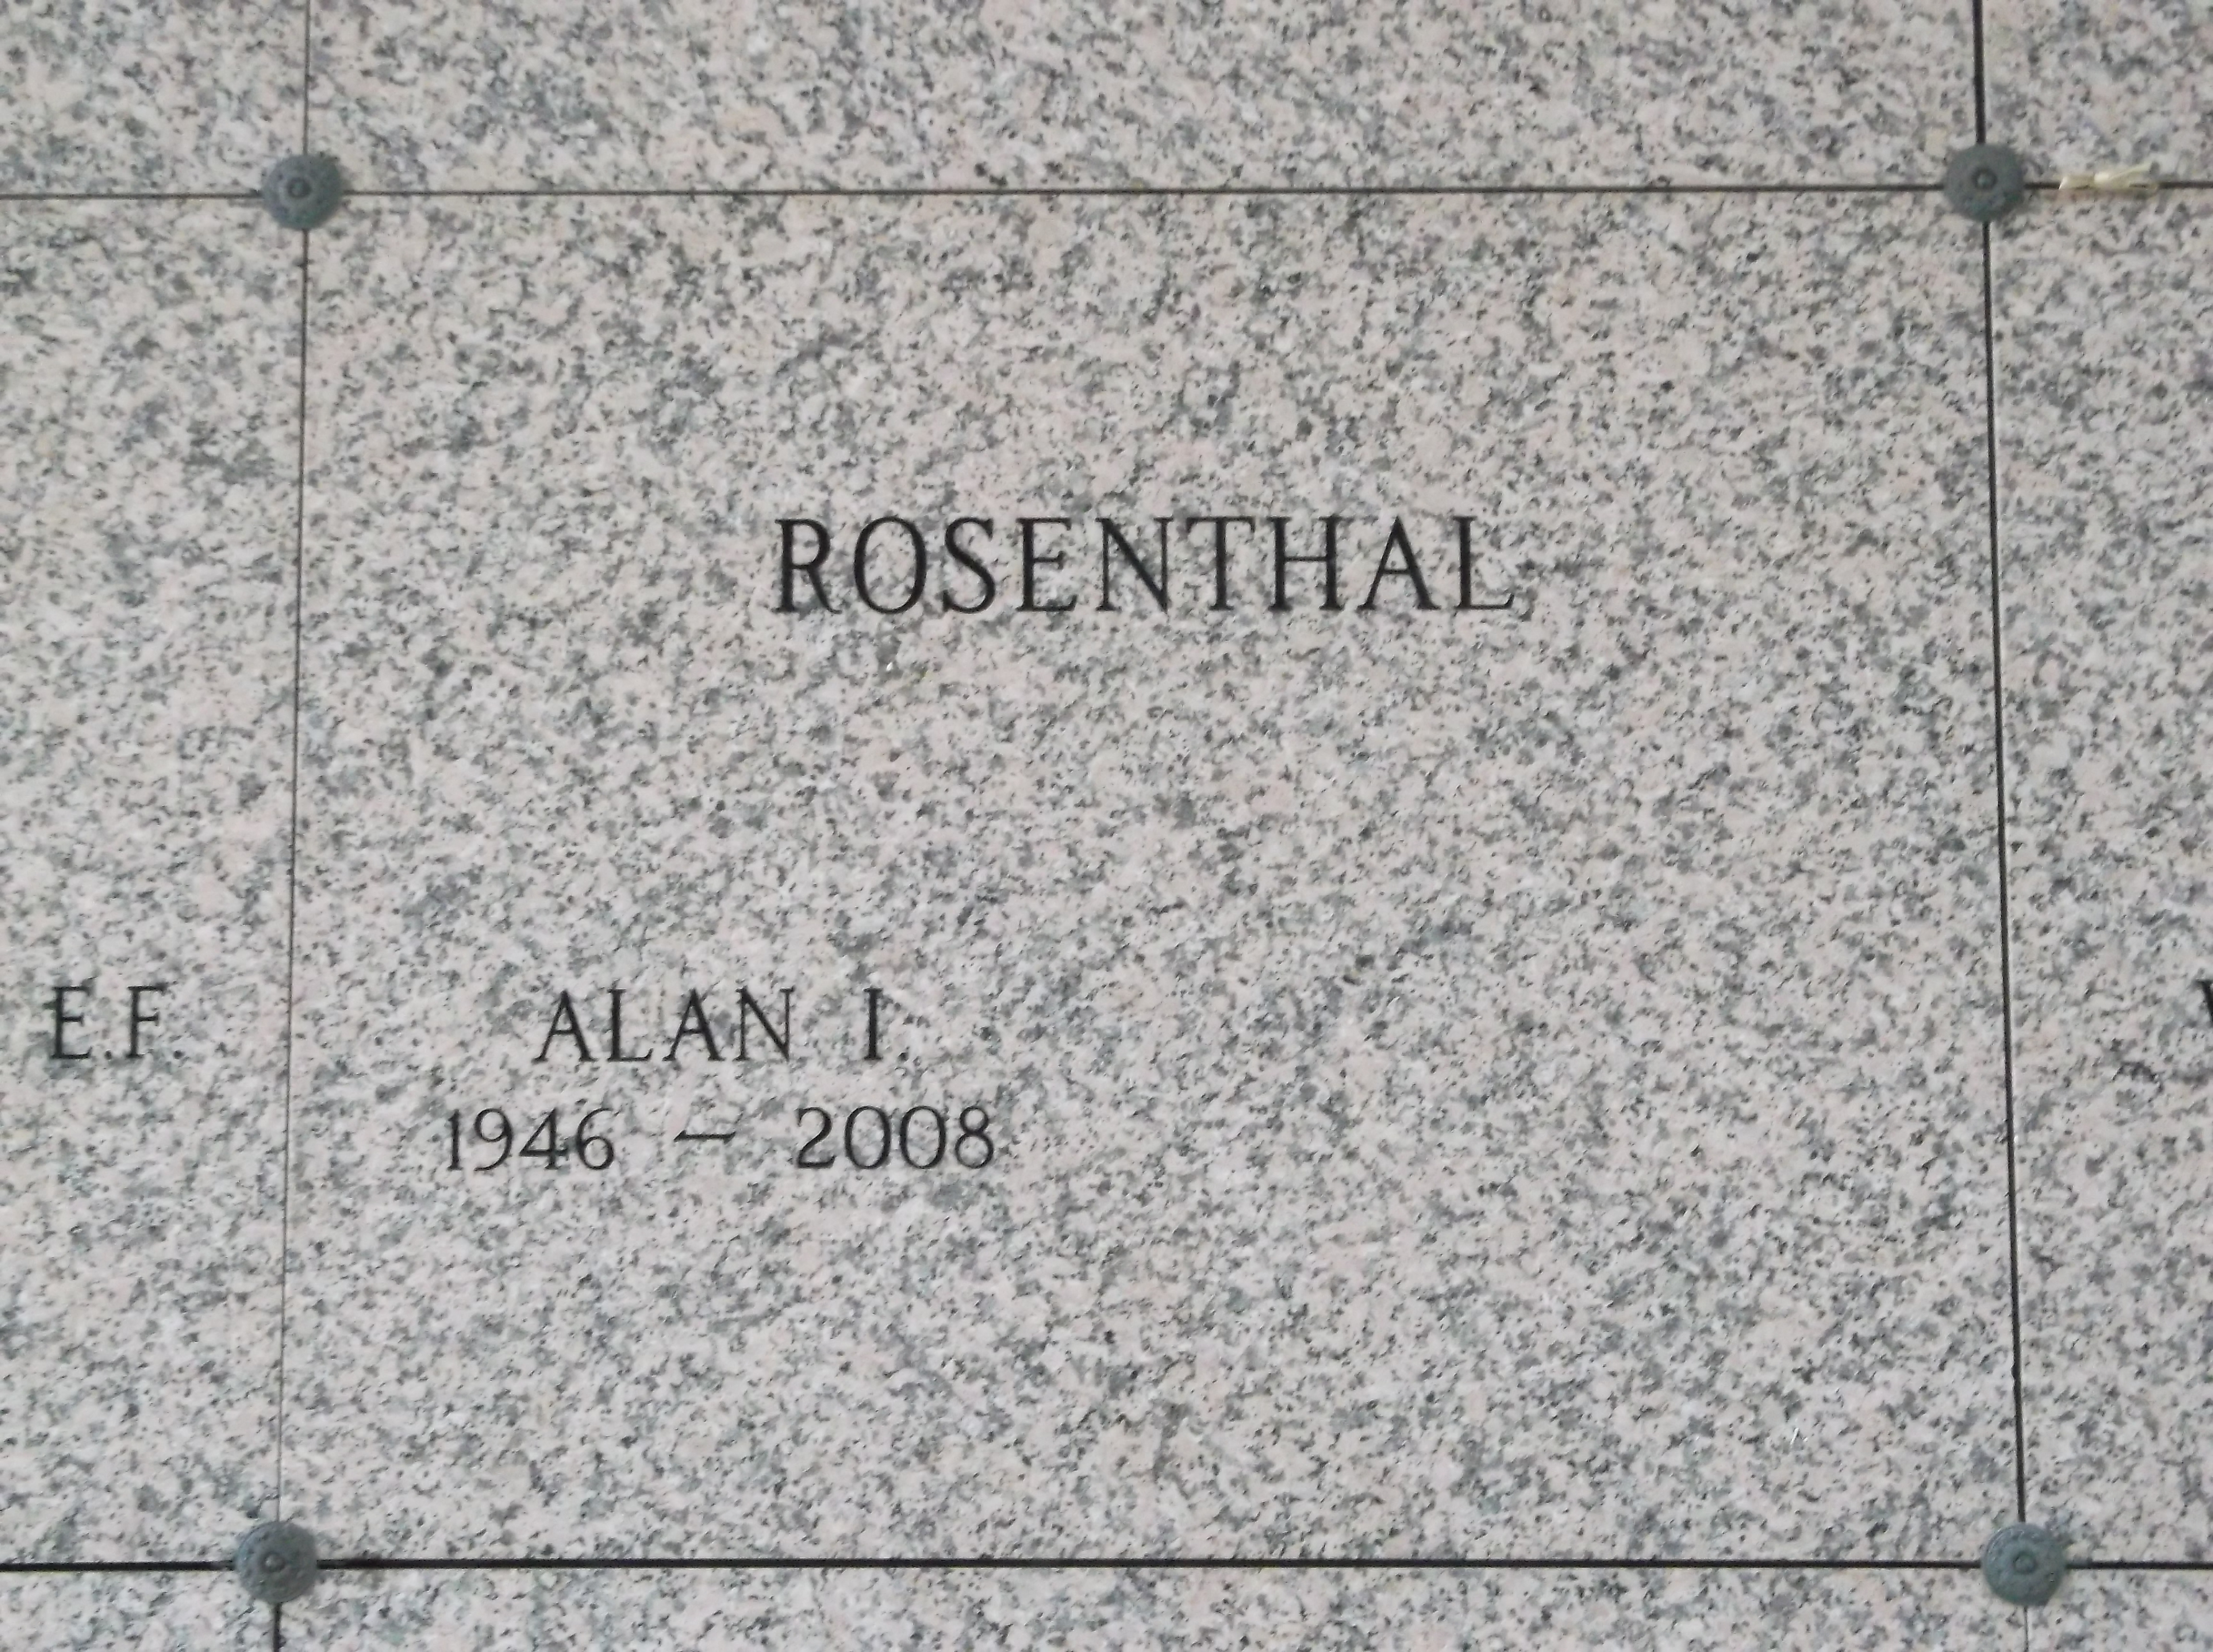 Alan I Rosenthal